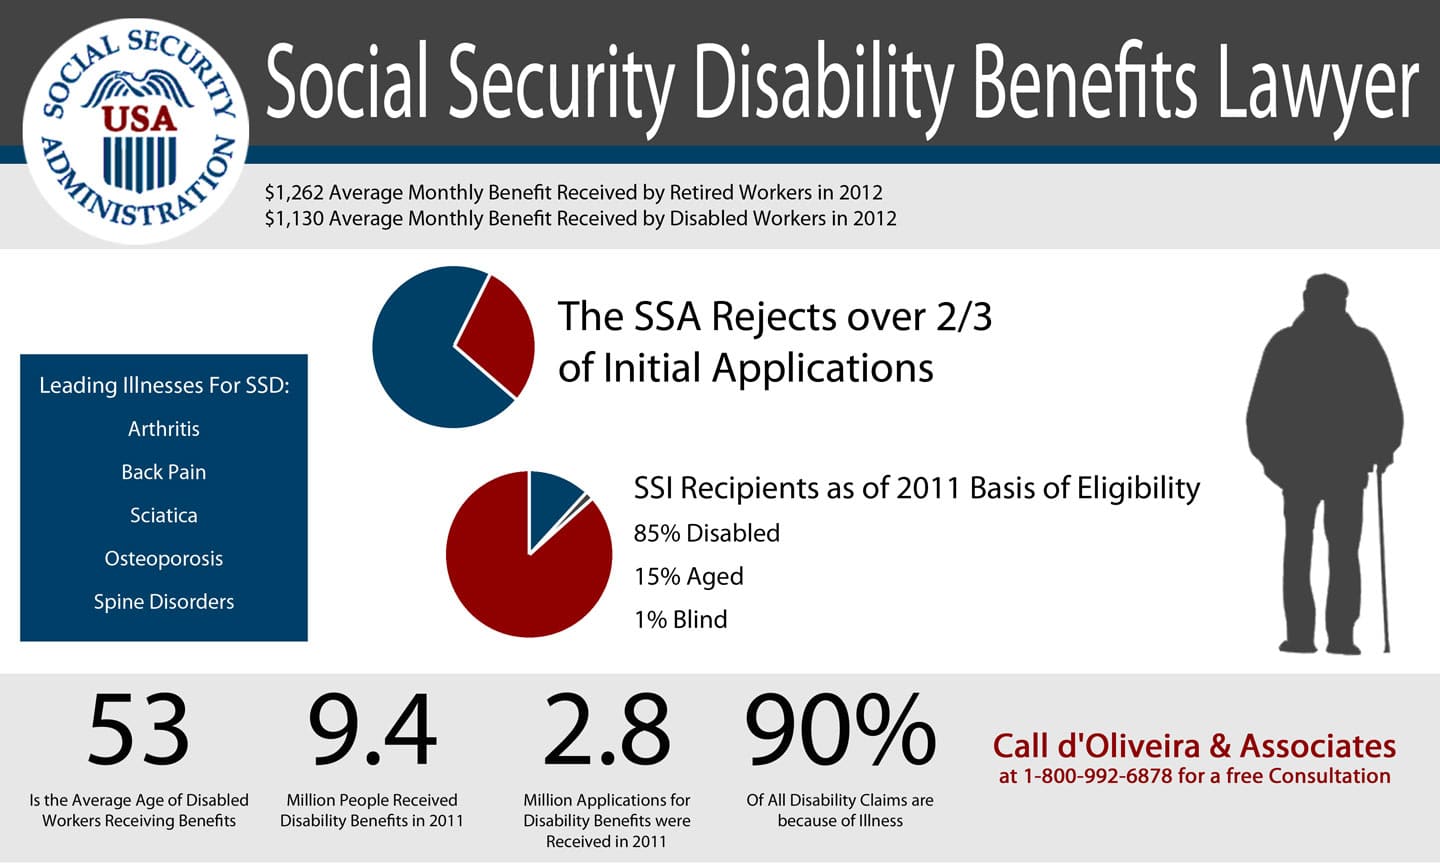 RI Social Security Disability Lawyer